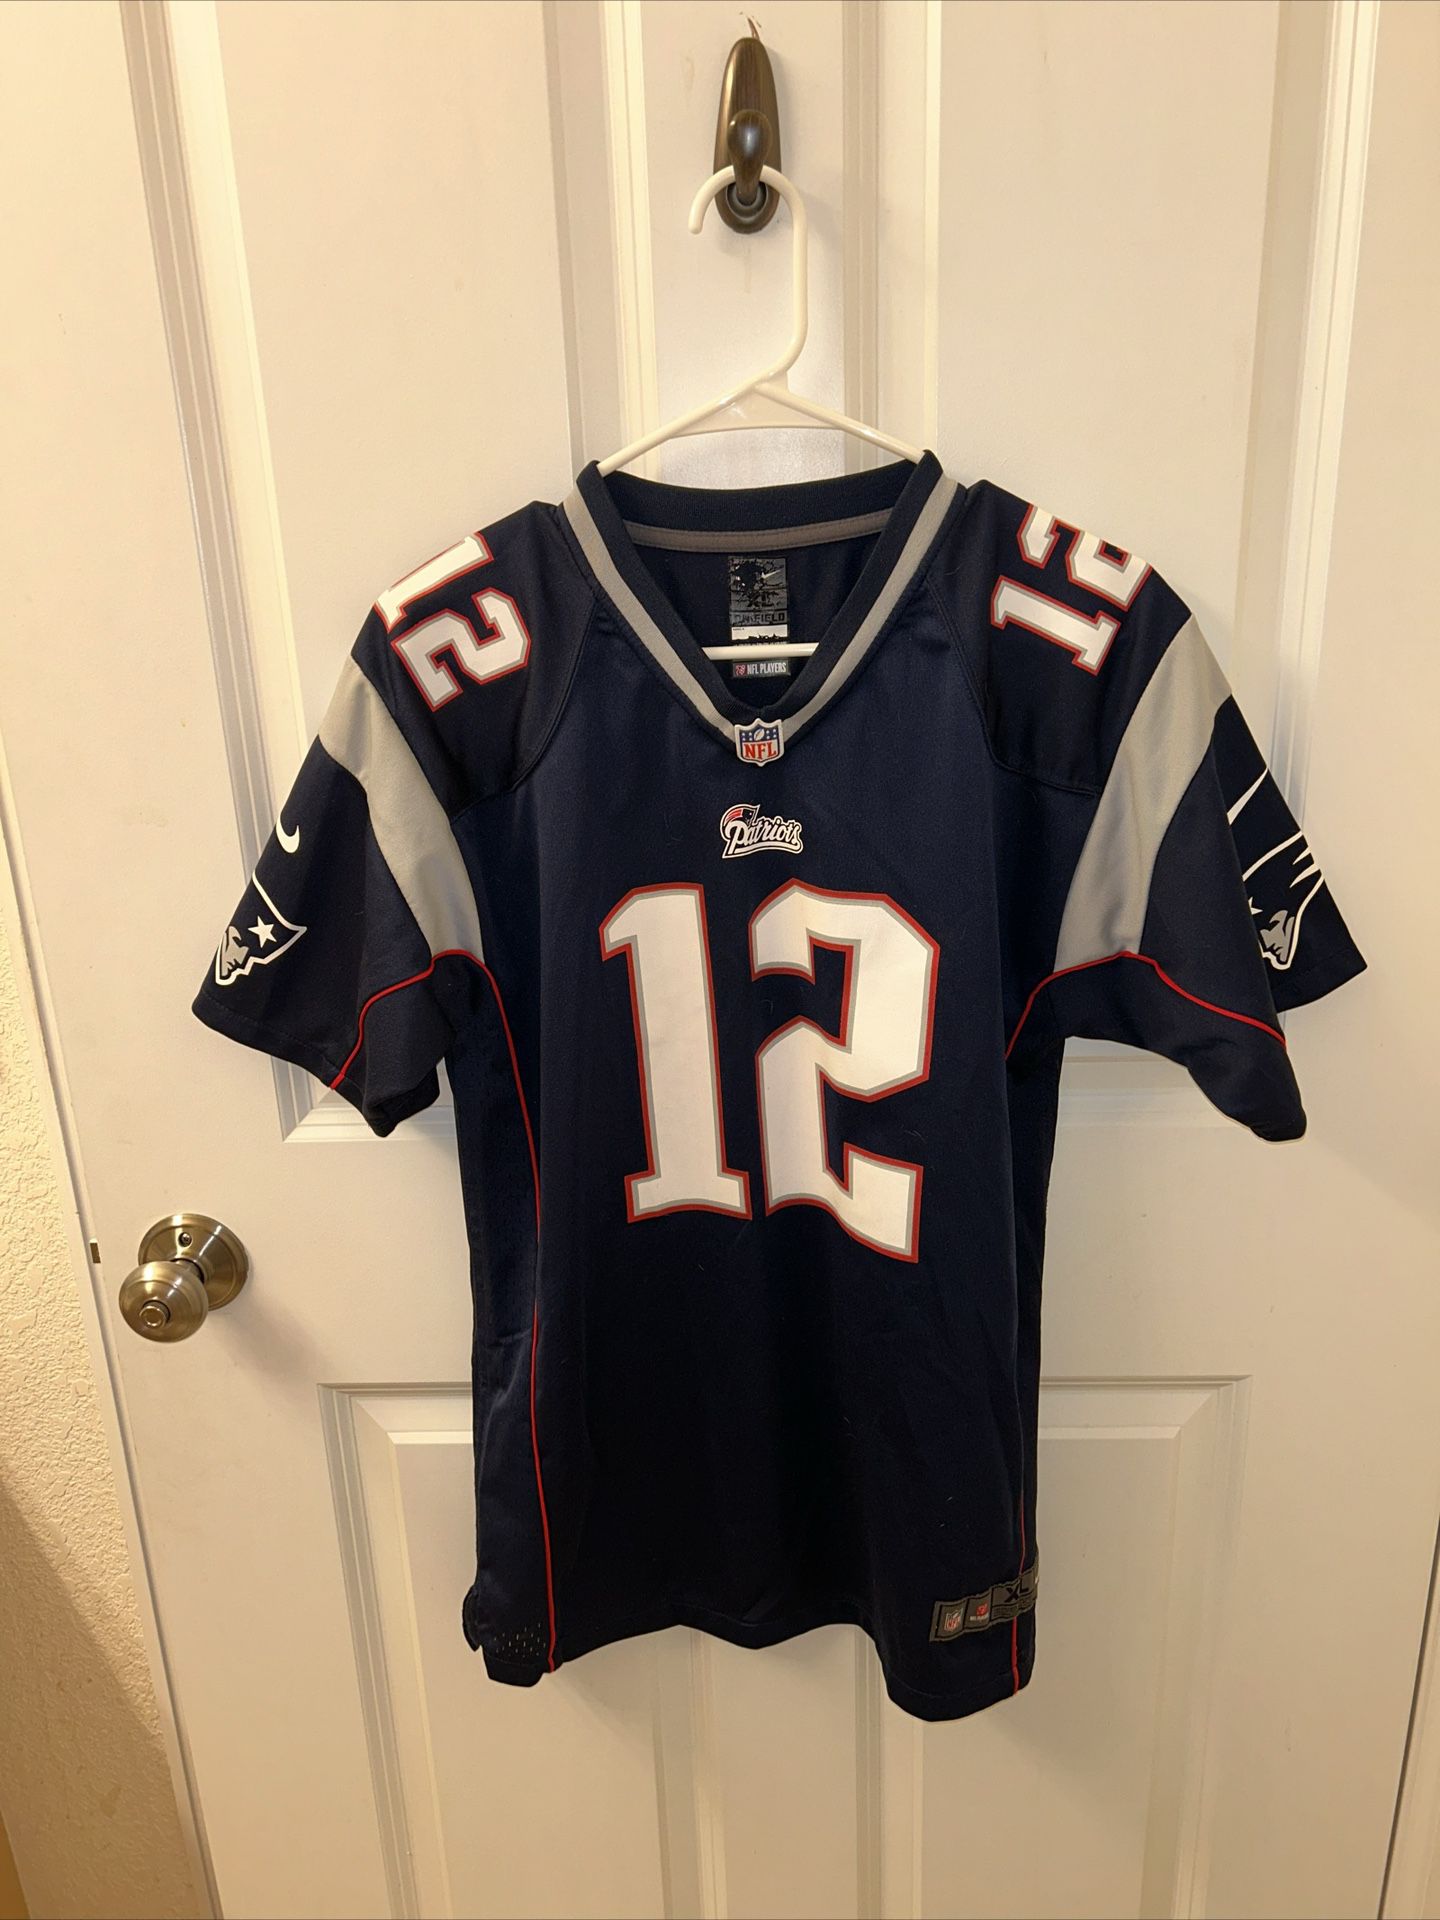 Kids XL Tom Brady New England Partriots Nike NFL On Field Jersey (fits like an adults small)